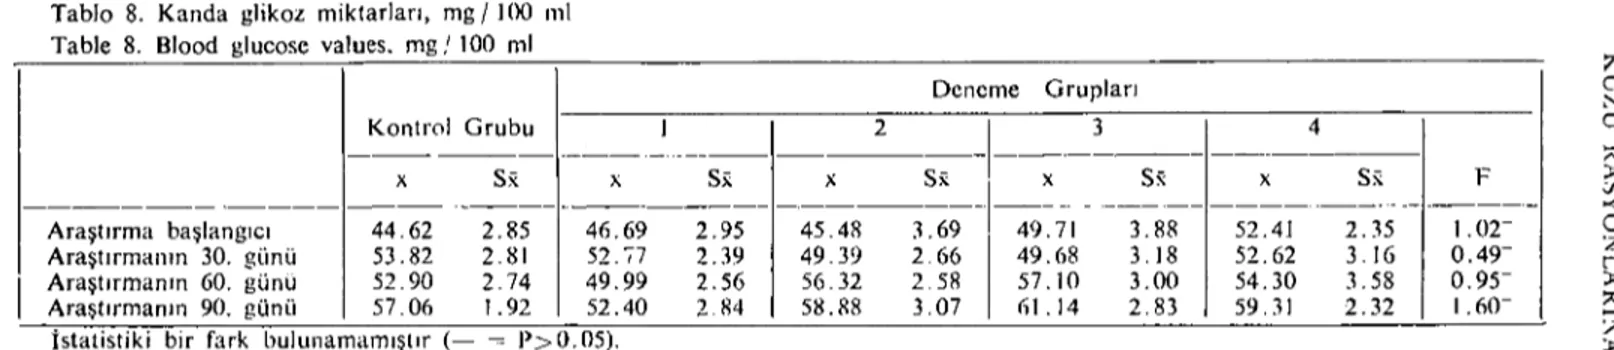 Tablo 8. Kanda glikoz miktarları Table 8. Blood glucose values. m